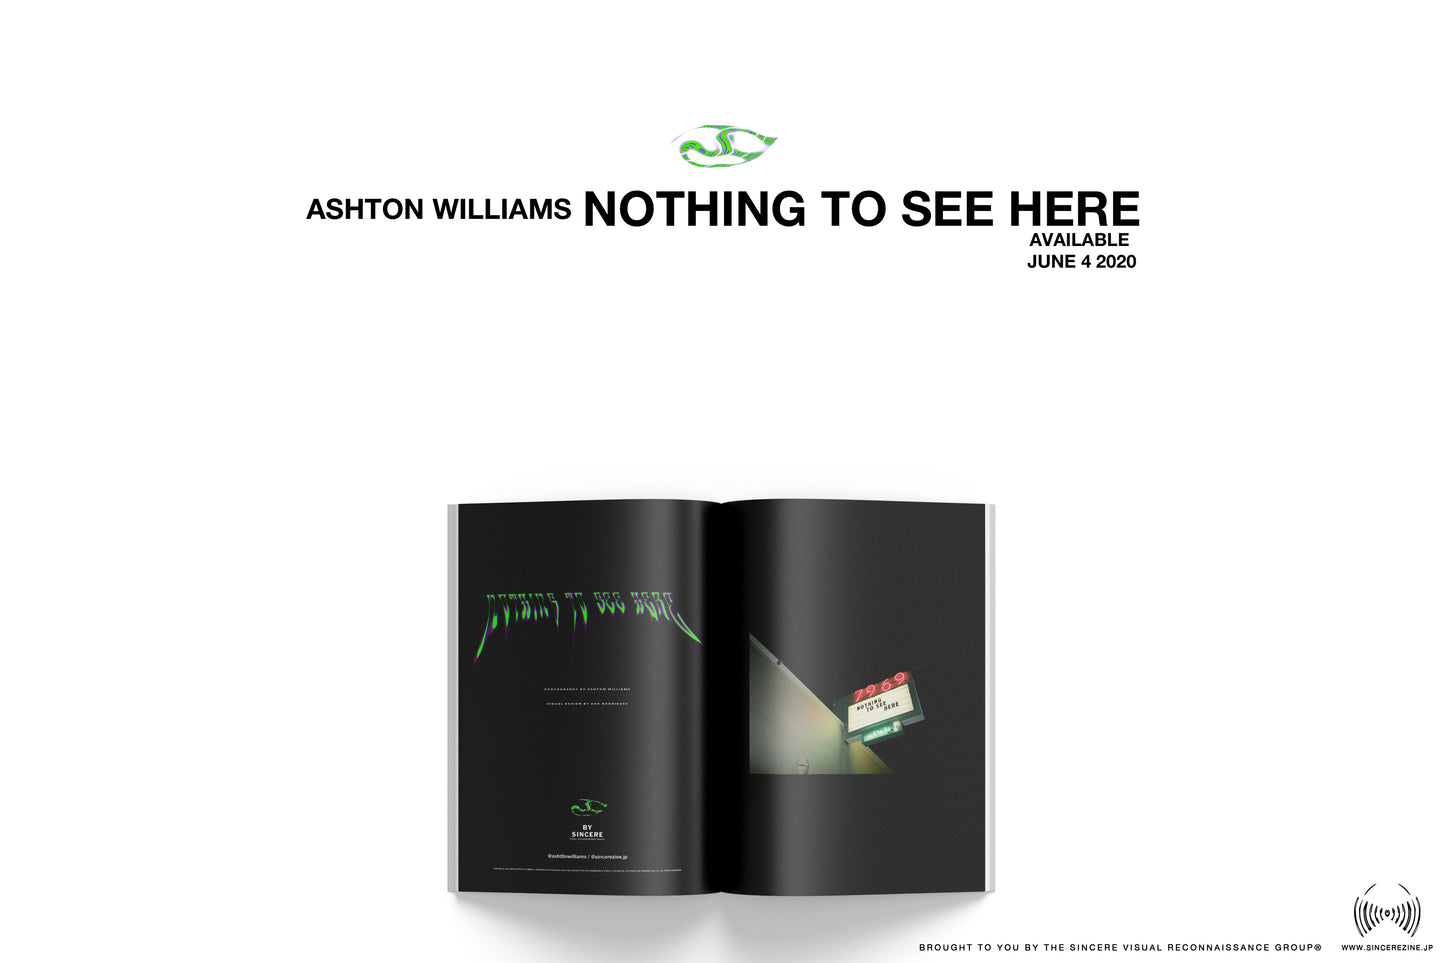 Ashton Williams "NOTHING TO SEE HERE" Photobook